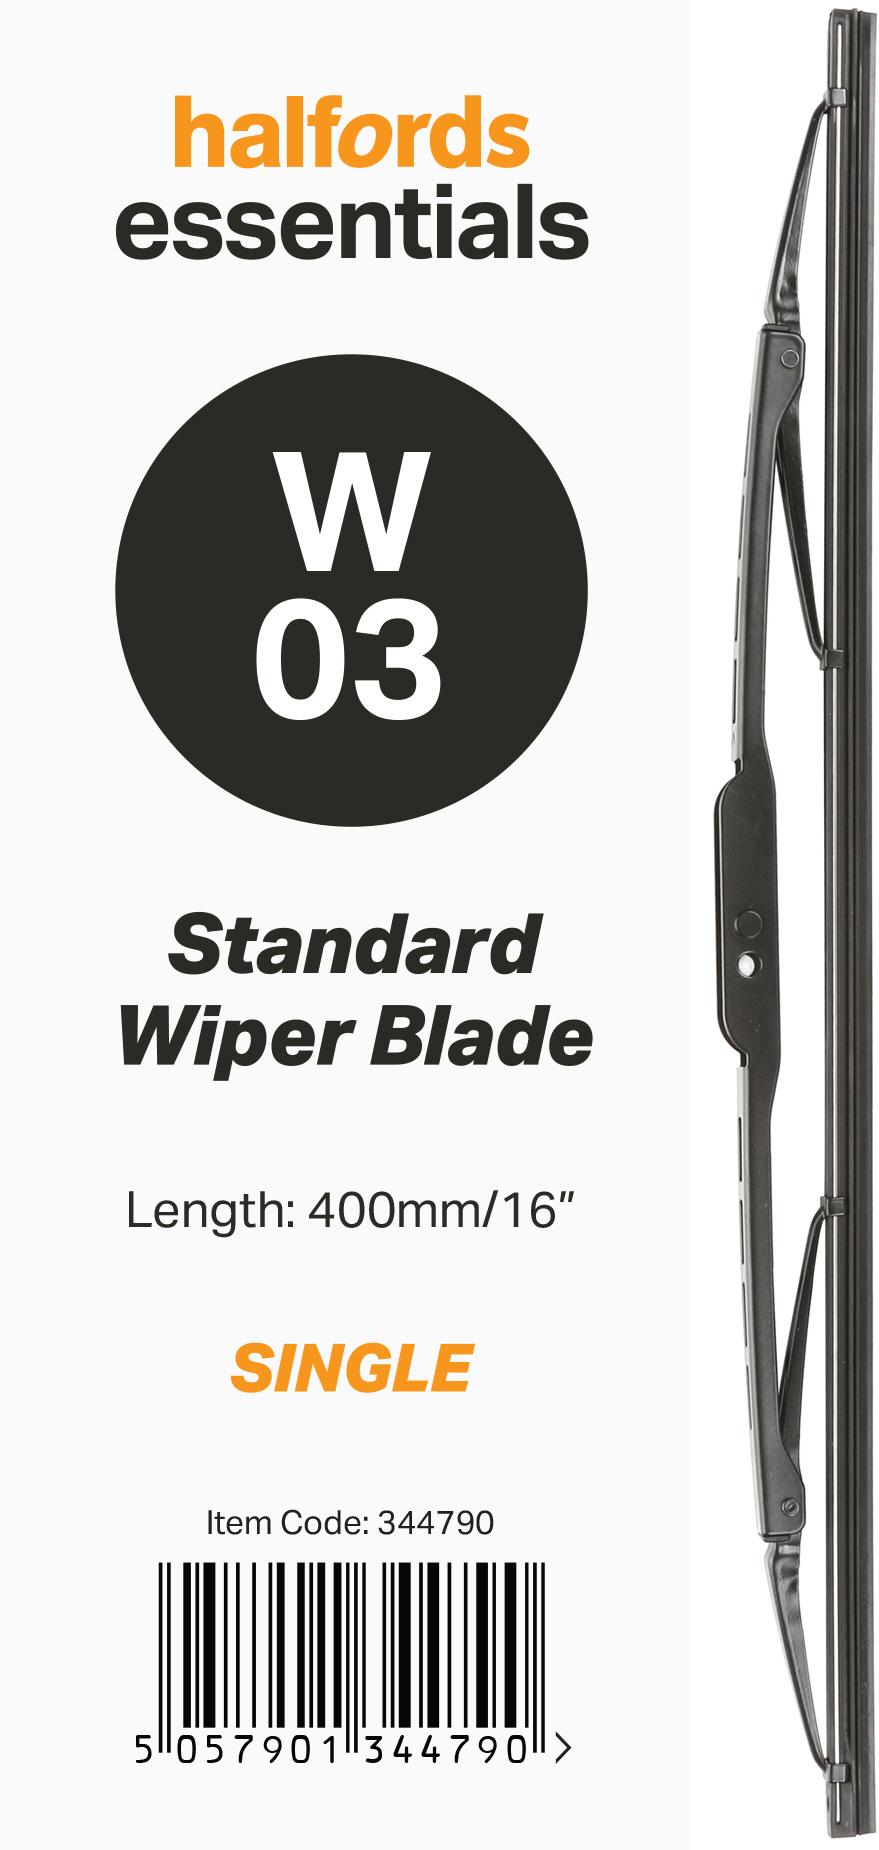 Halfords Essentials Single Wiper Blade W03 - 16 Inch